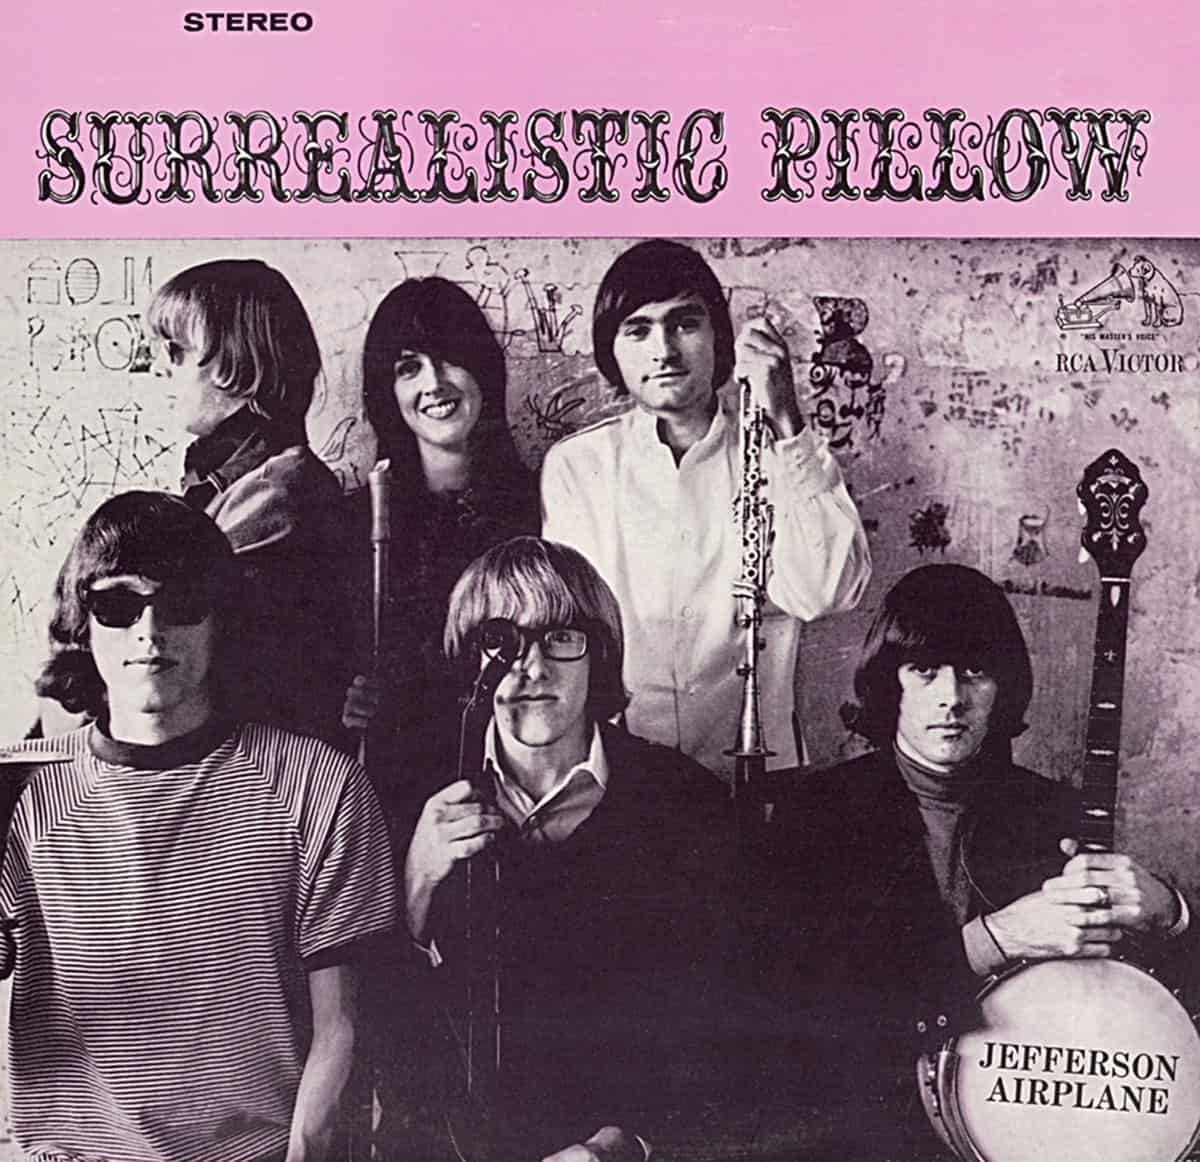 Jefferson-Airplane-Surrealistic-Pillow-vinyl-record-album-front